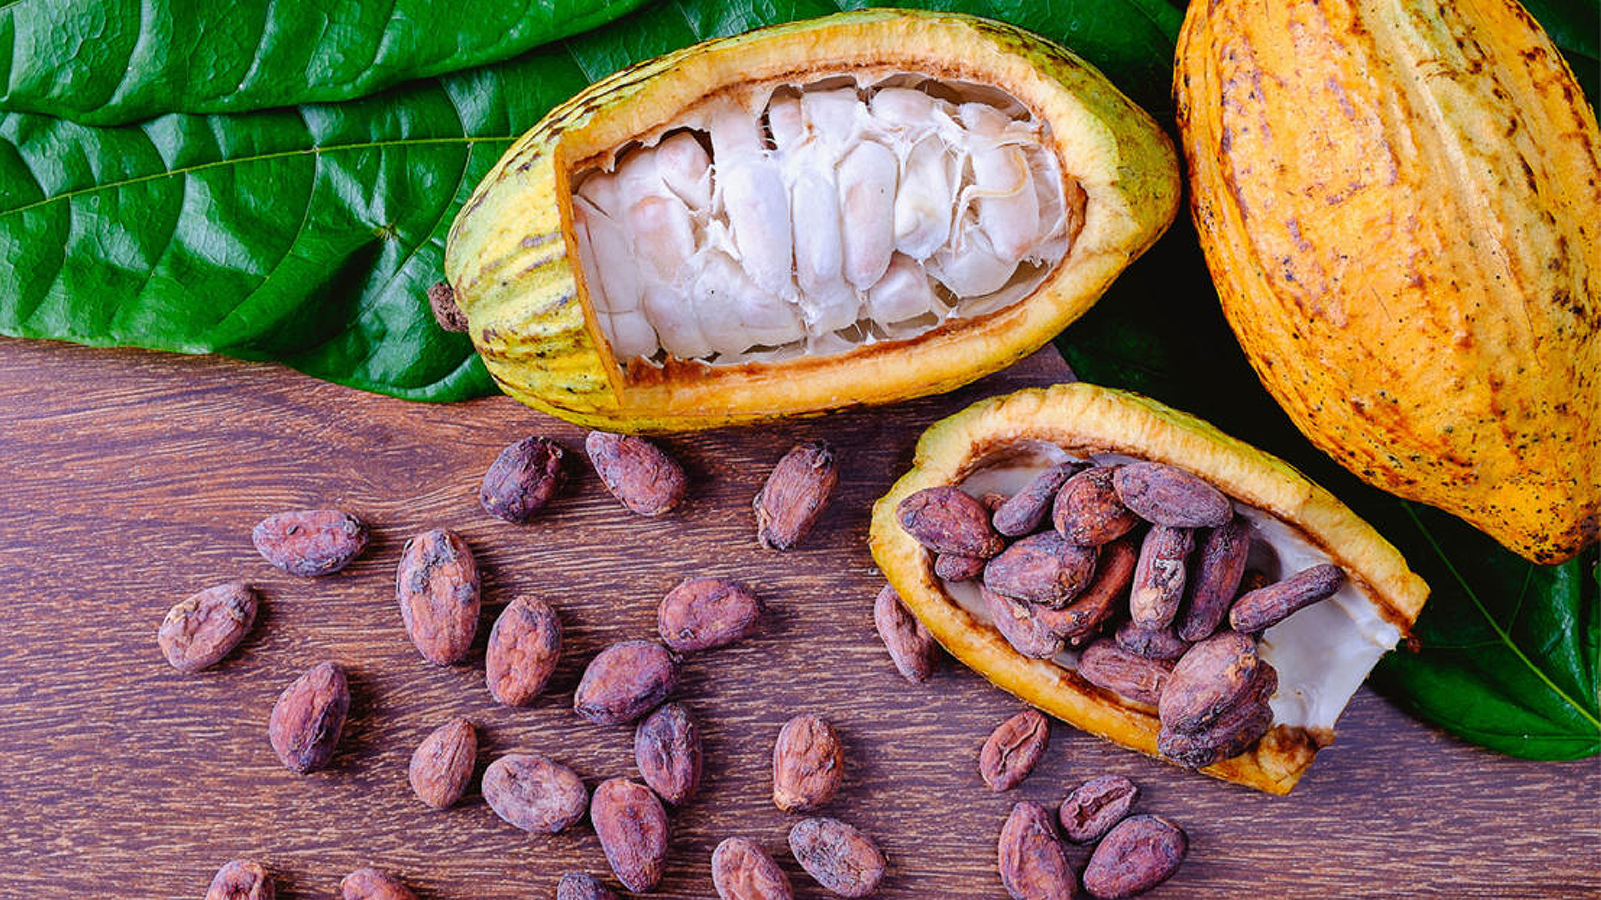 Nigerian cocoa growers’ shipments halt over levy dispute